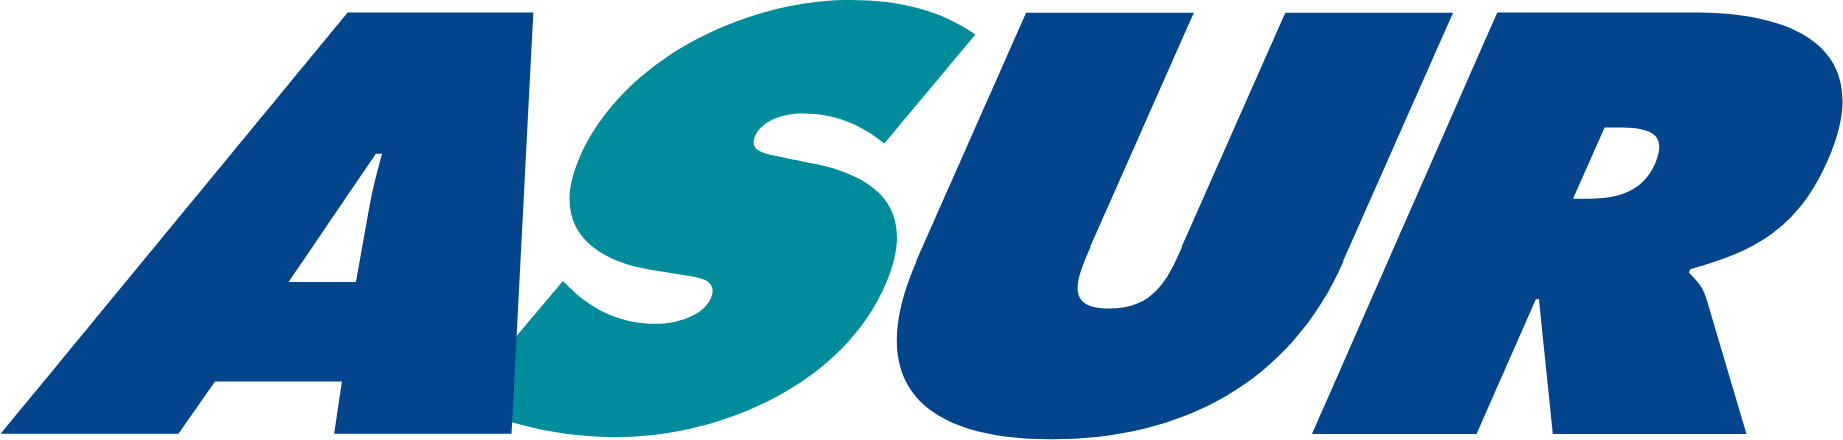 Grupo Aeroportuario del Sureste
 logo (transparent PNG)